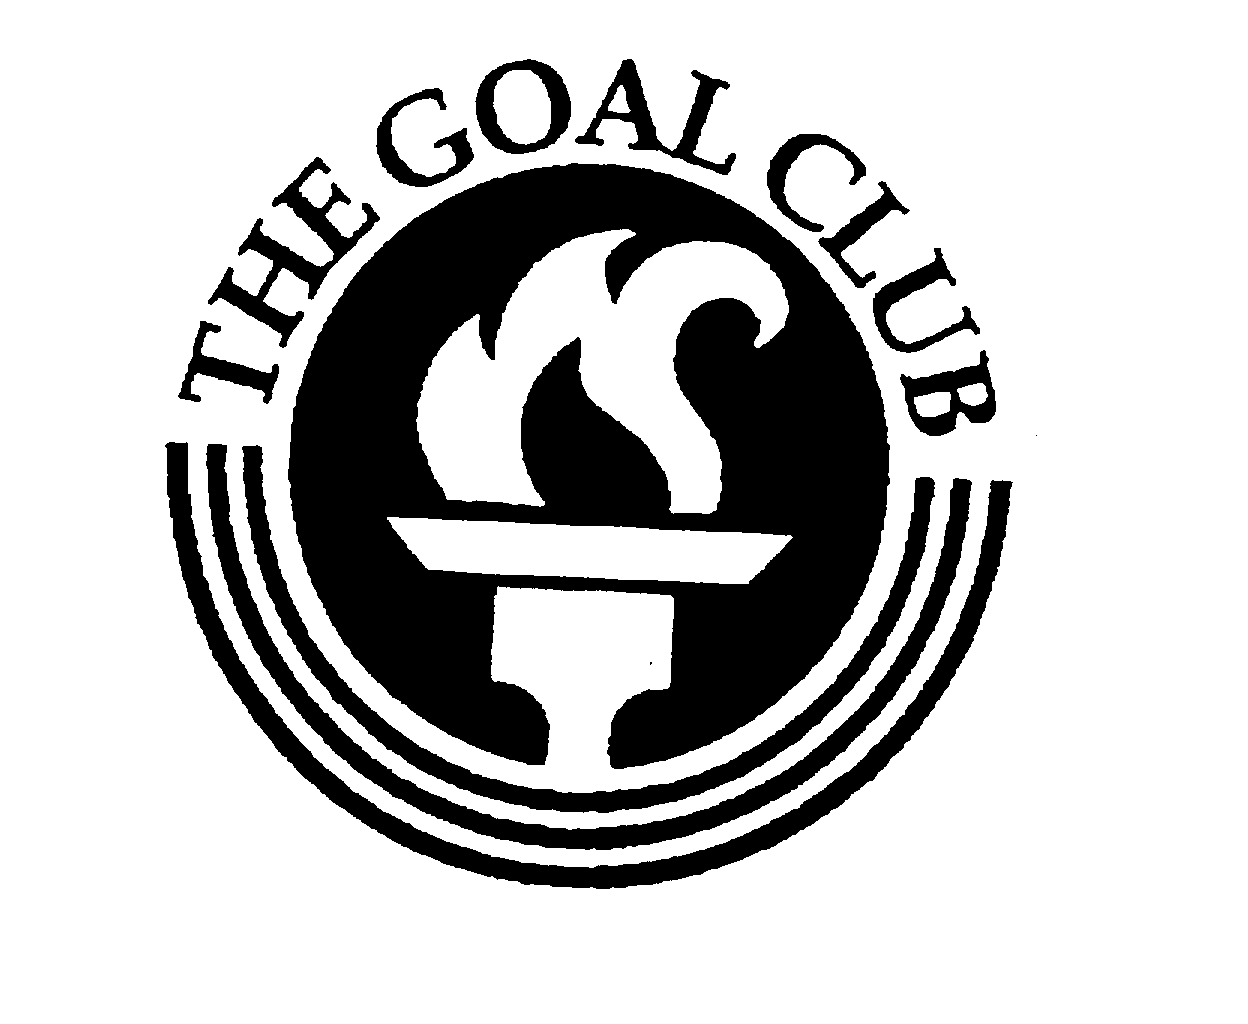 THE GOAL CLUB